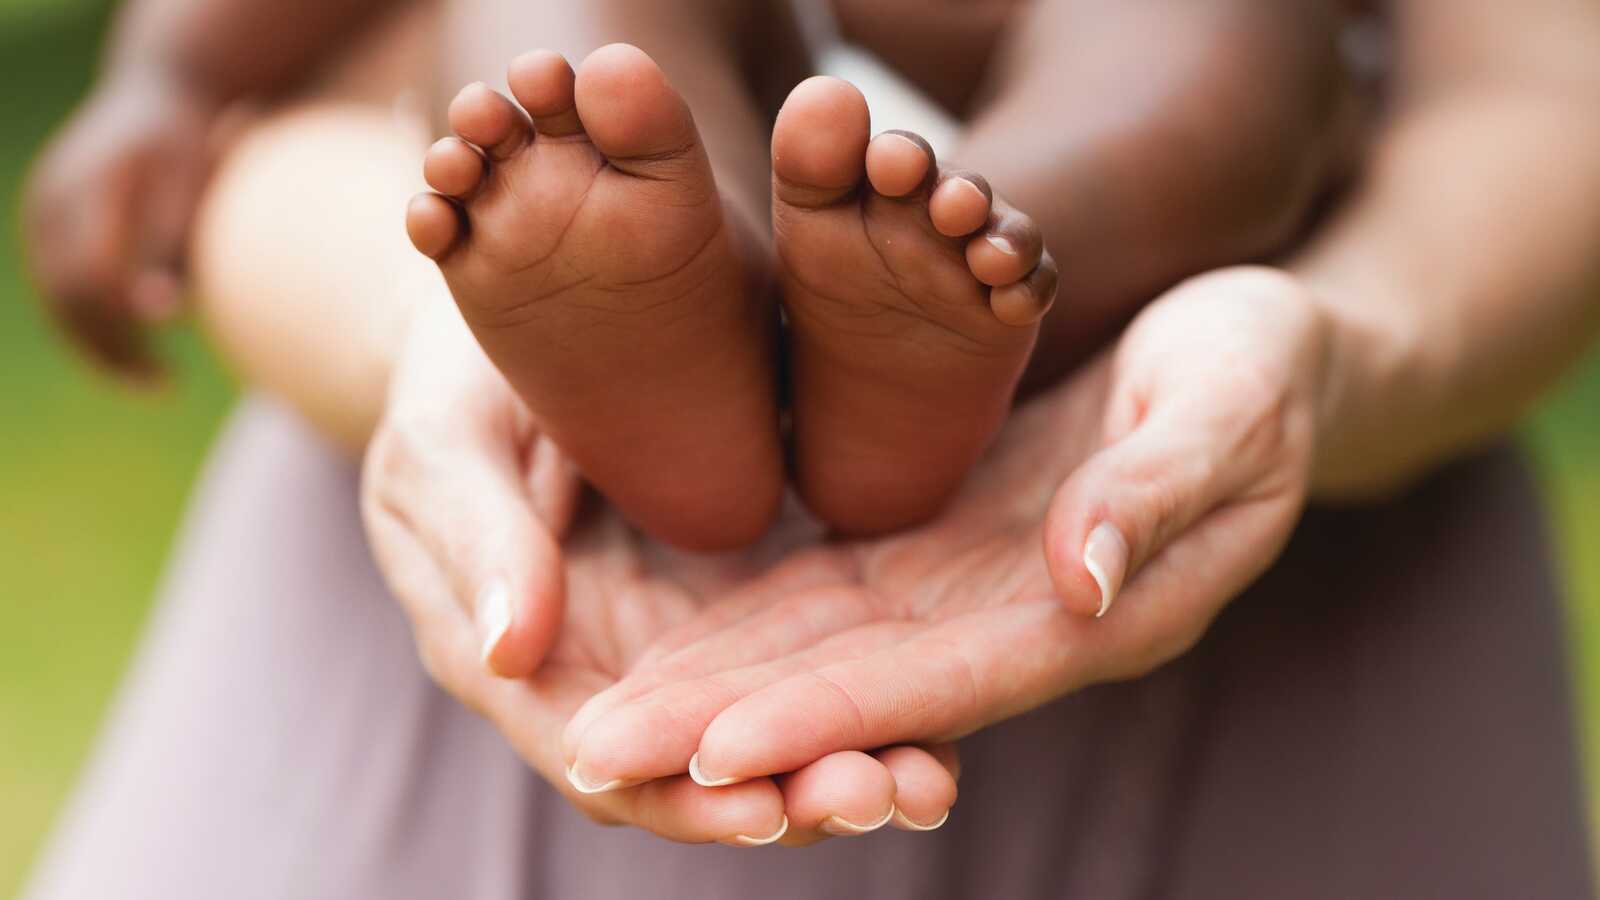 woman holing babies feet